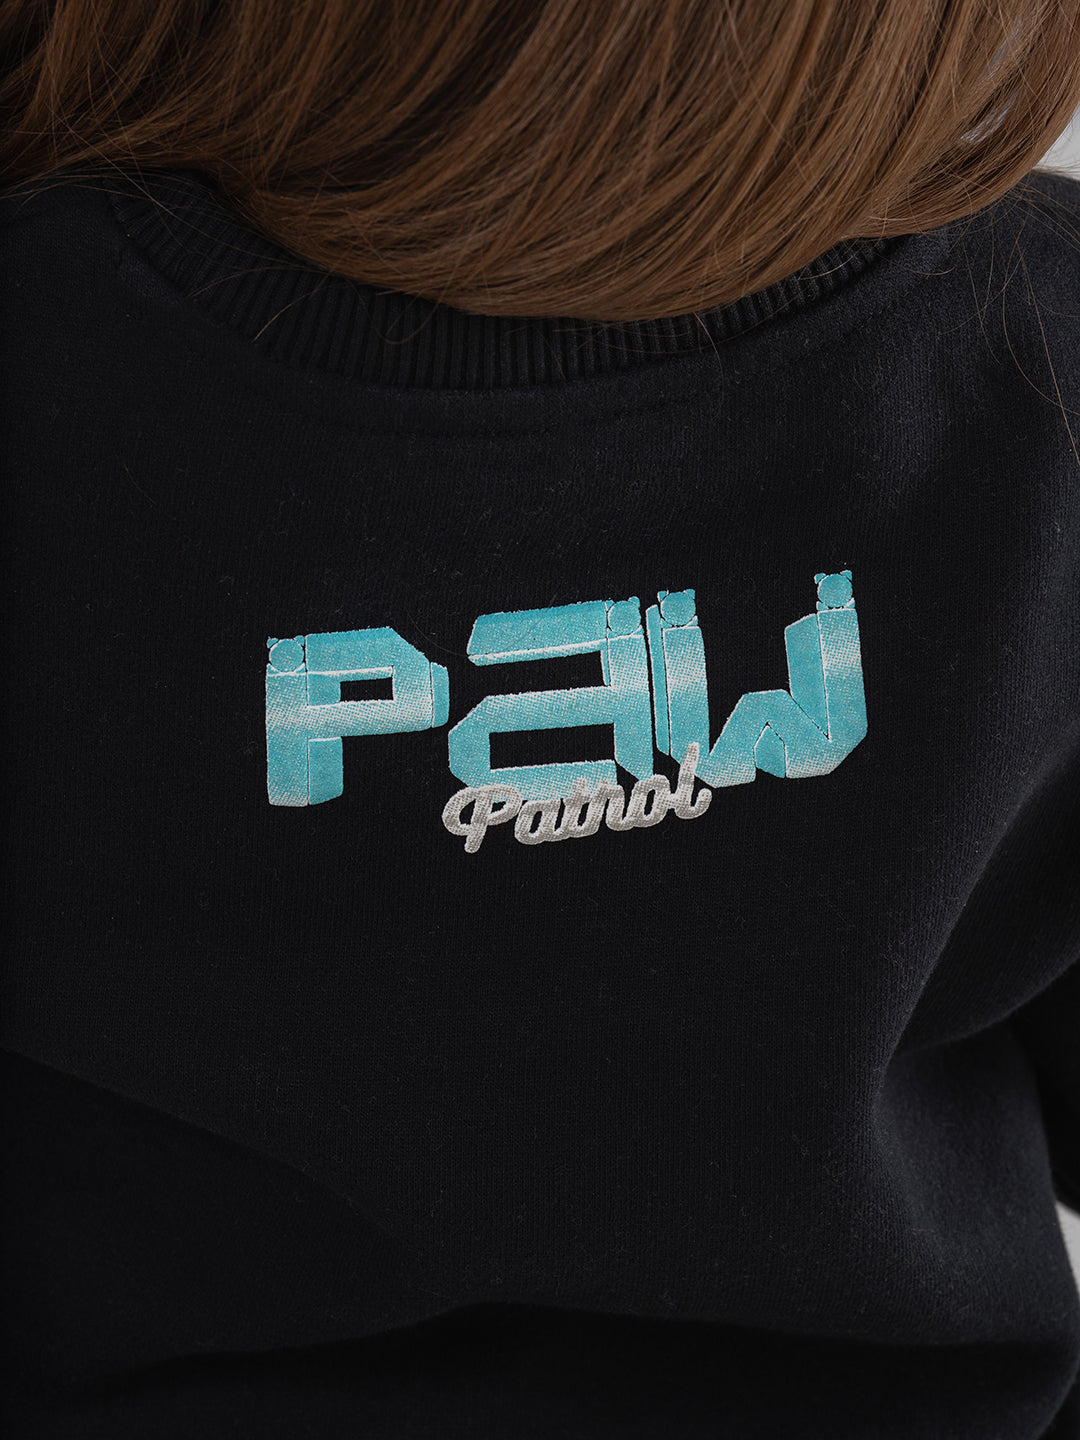 Paw Patrol Playful Printed Sweatshirt